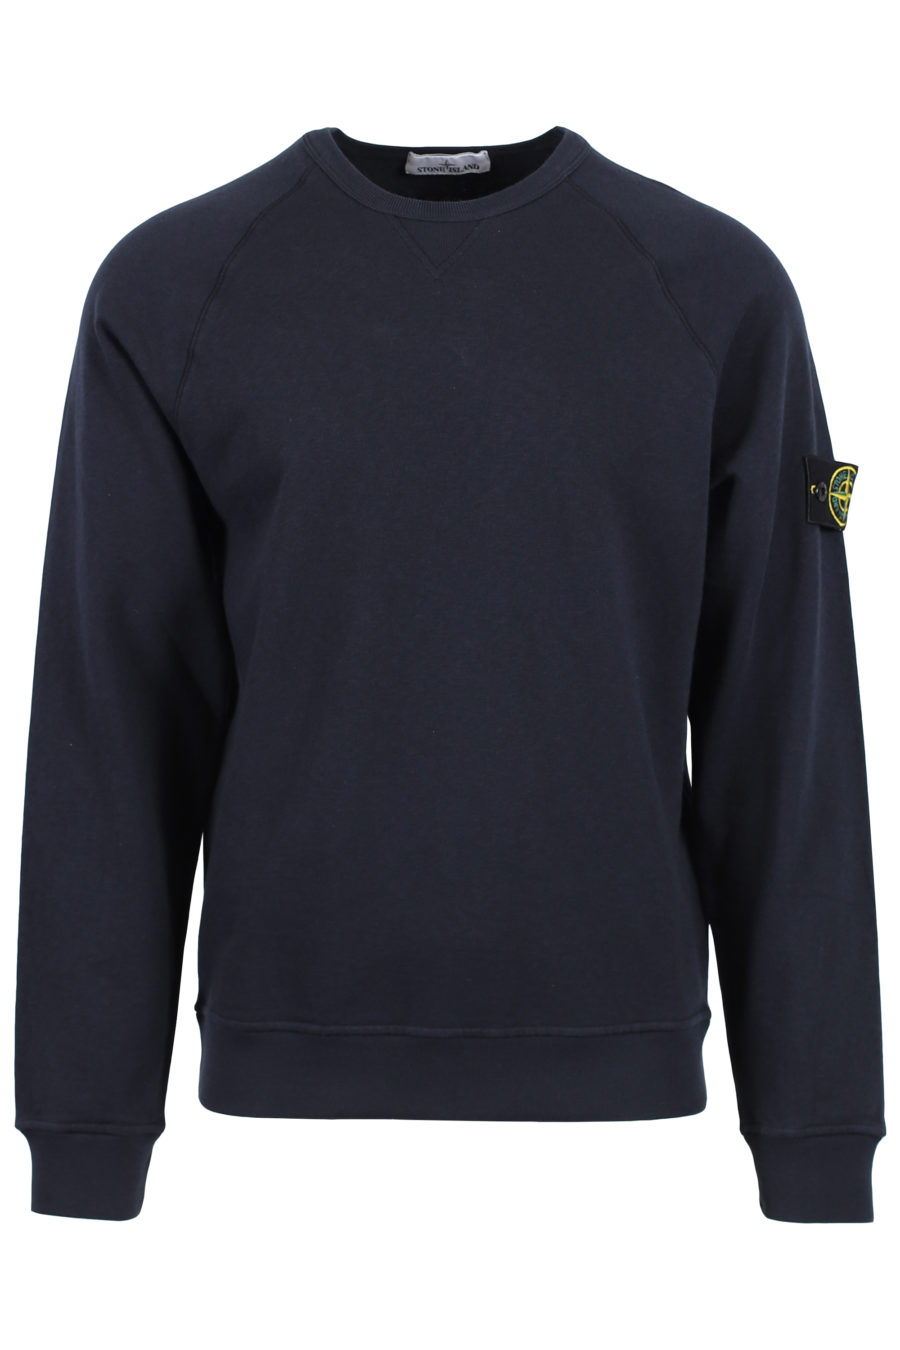 Marineblaues Sweatshirt mit Aufnäher - IMG 3648